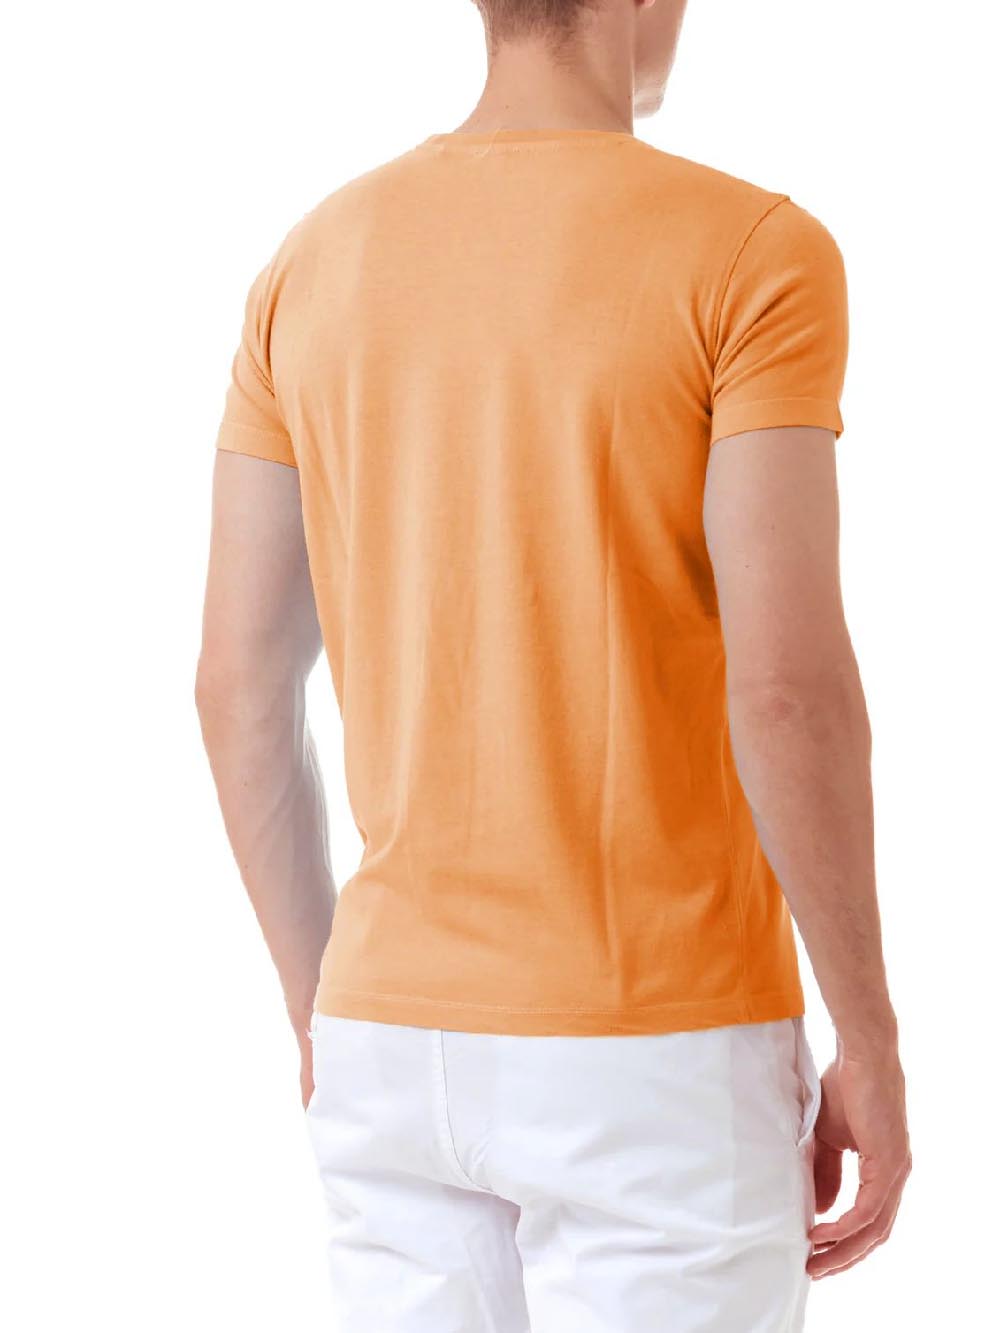 U.S. POLO ASSN. T-shirt Uomo Arancione fluo